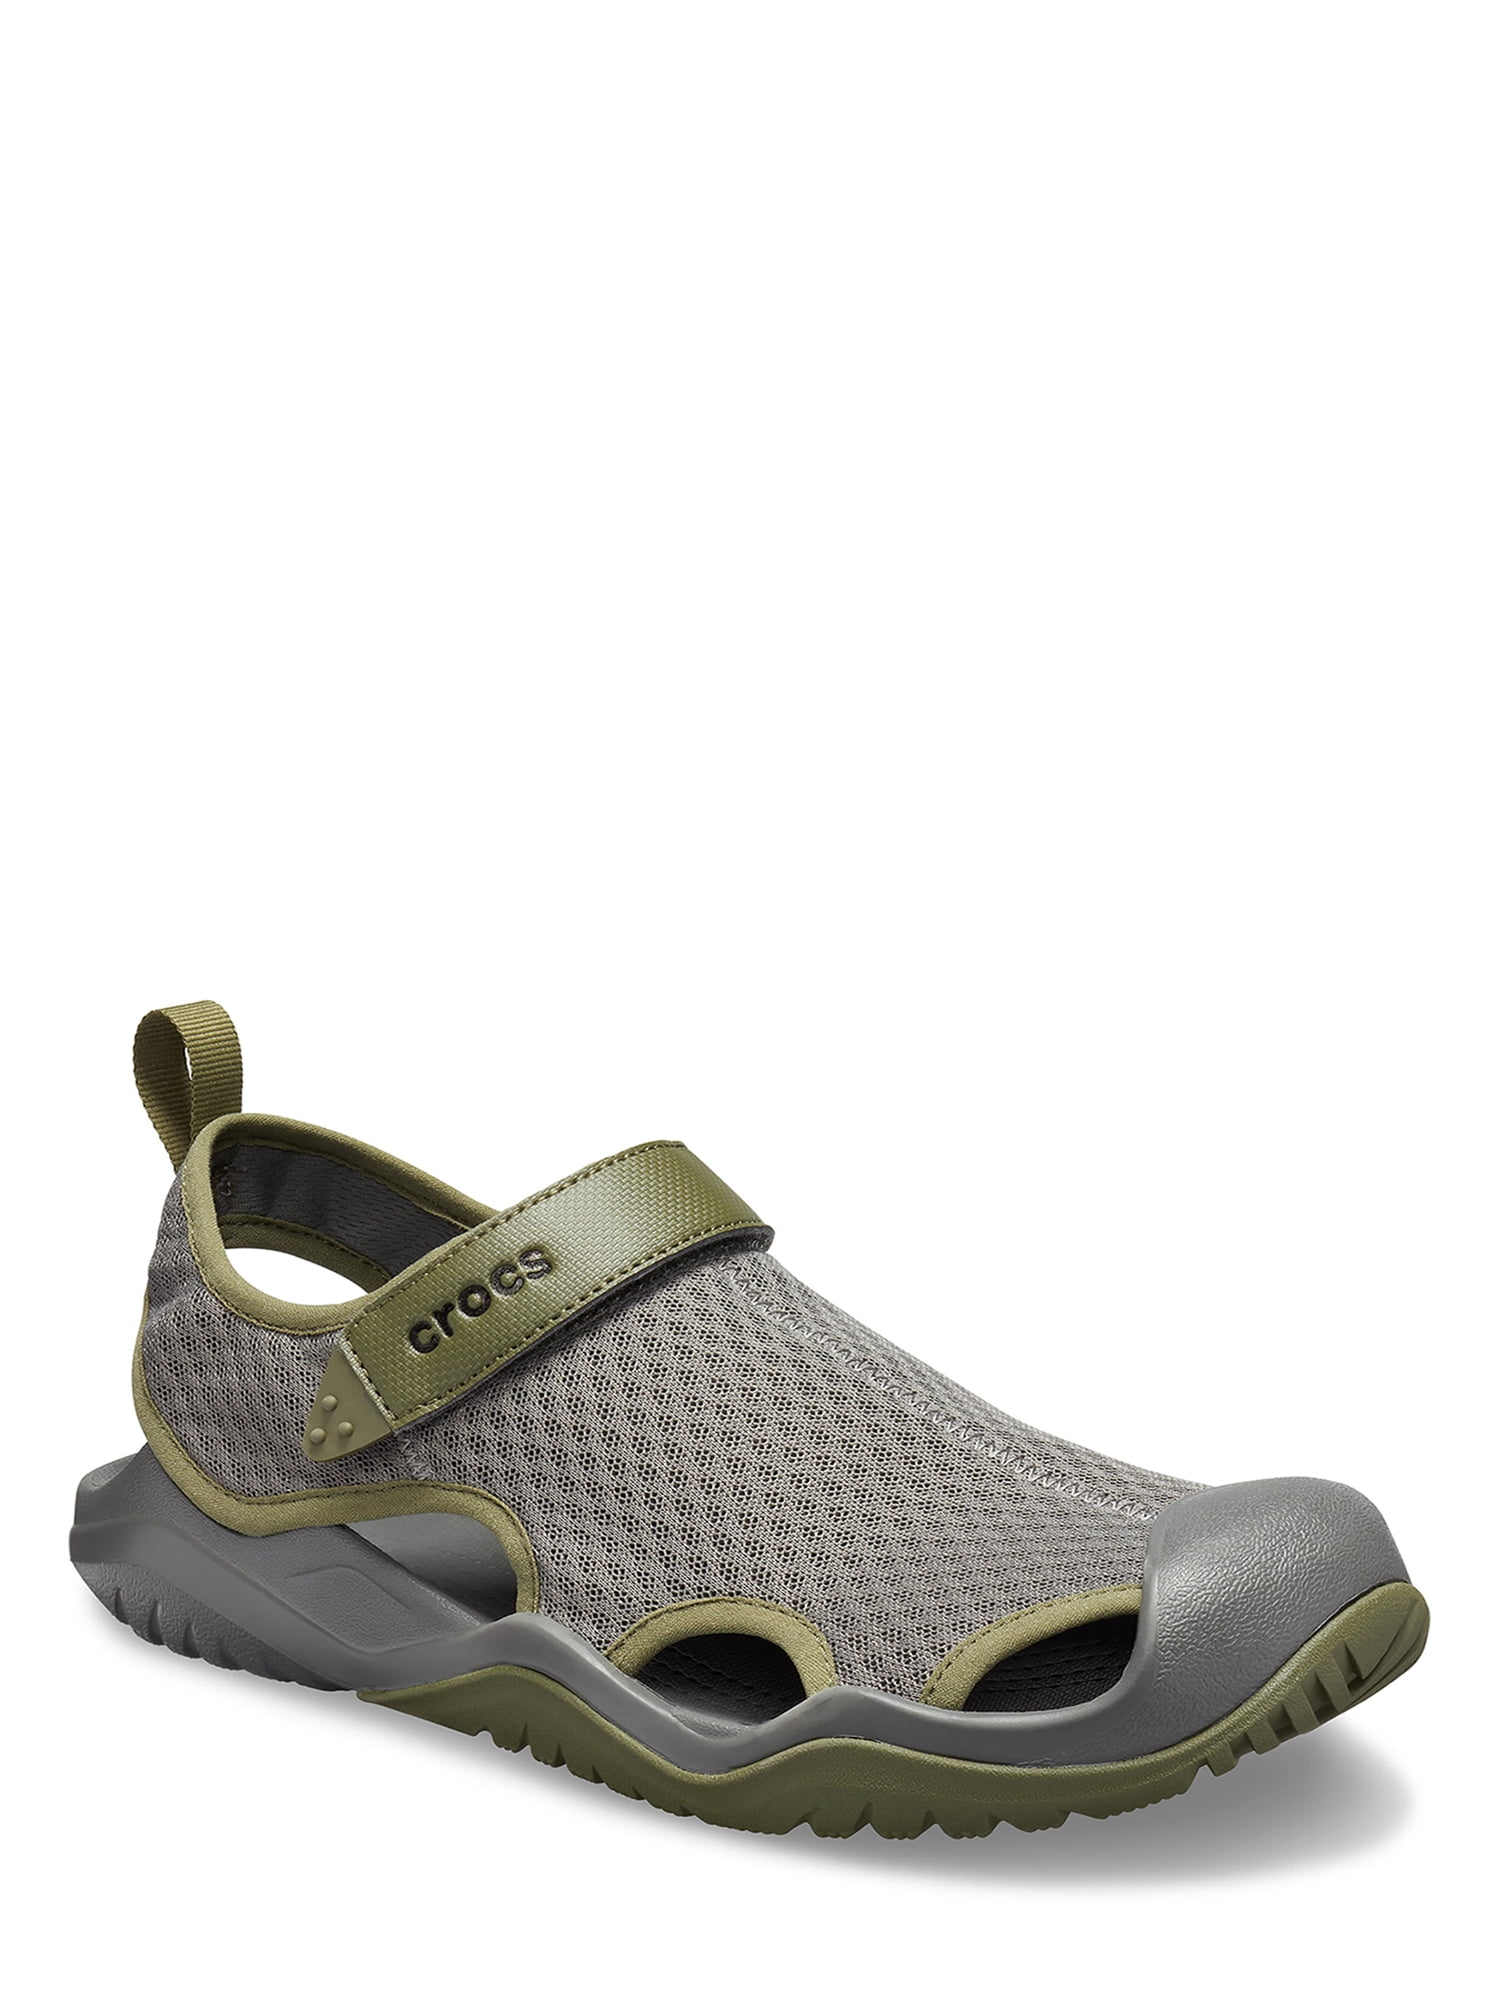 Crocs - Crocs Men's Swiftwater Mesh Deck Sandals - Walmart.com ...